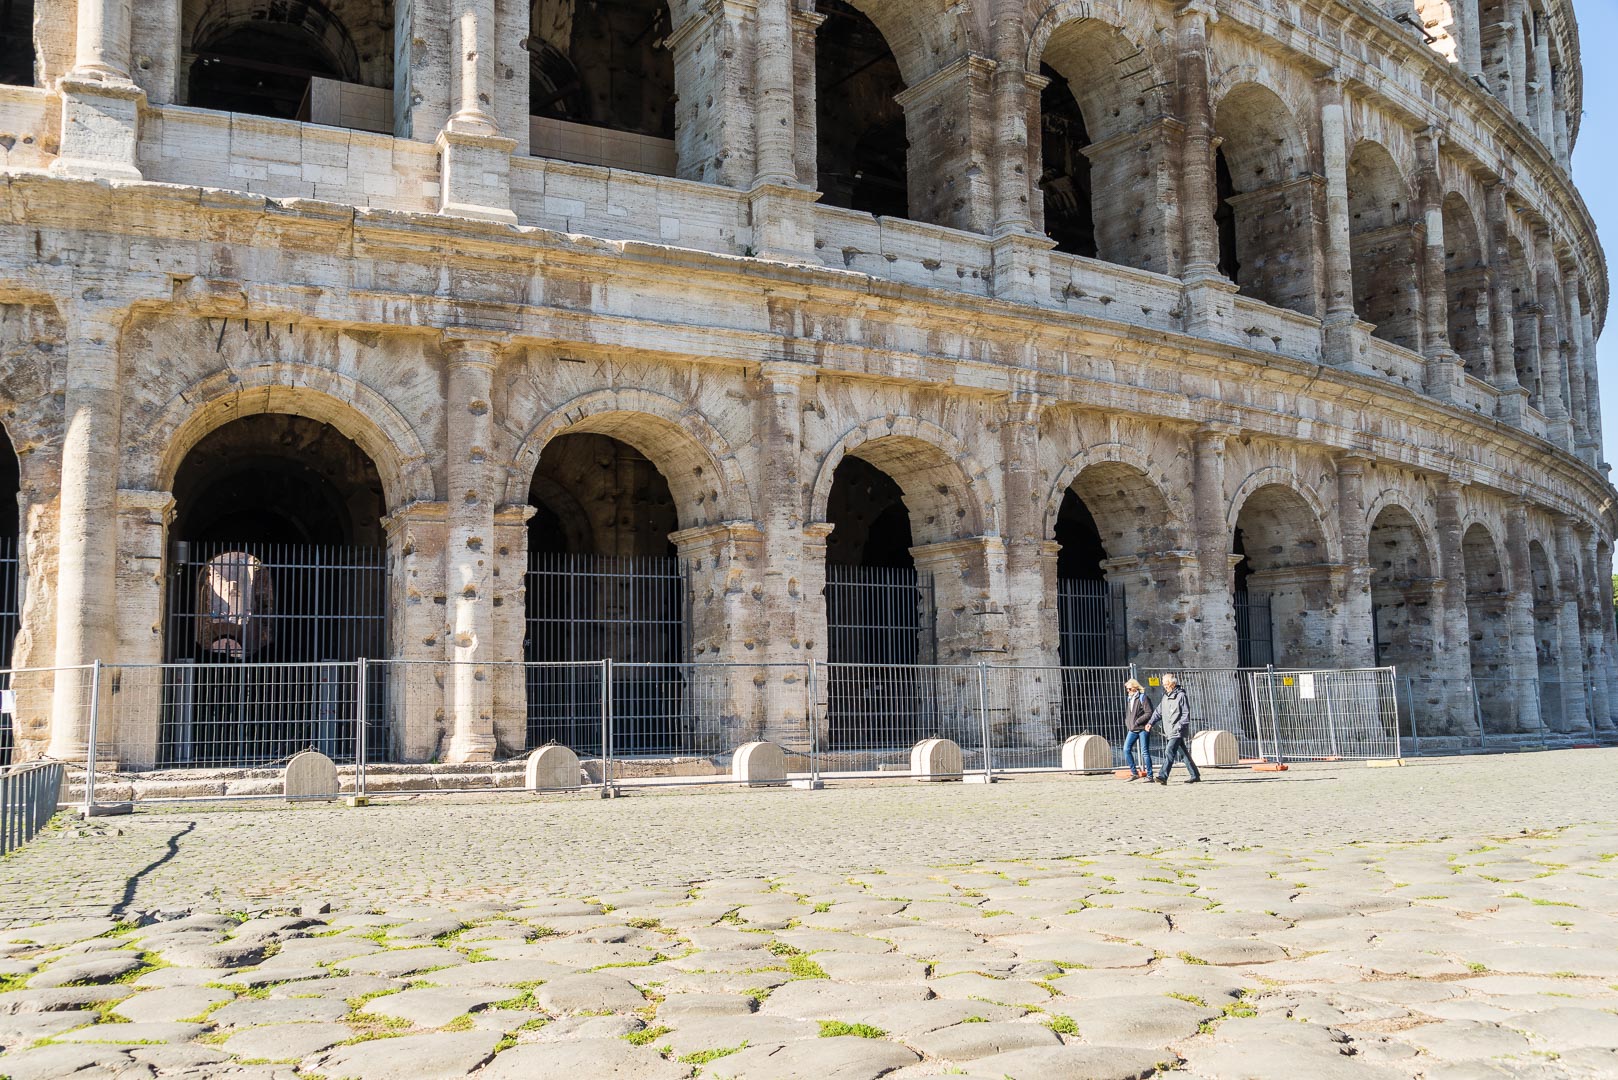 Backplate • ID: 8481 • HDRI Haven - Ruins Of Colosseum